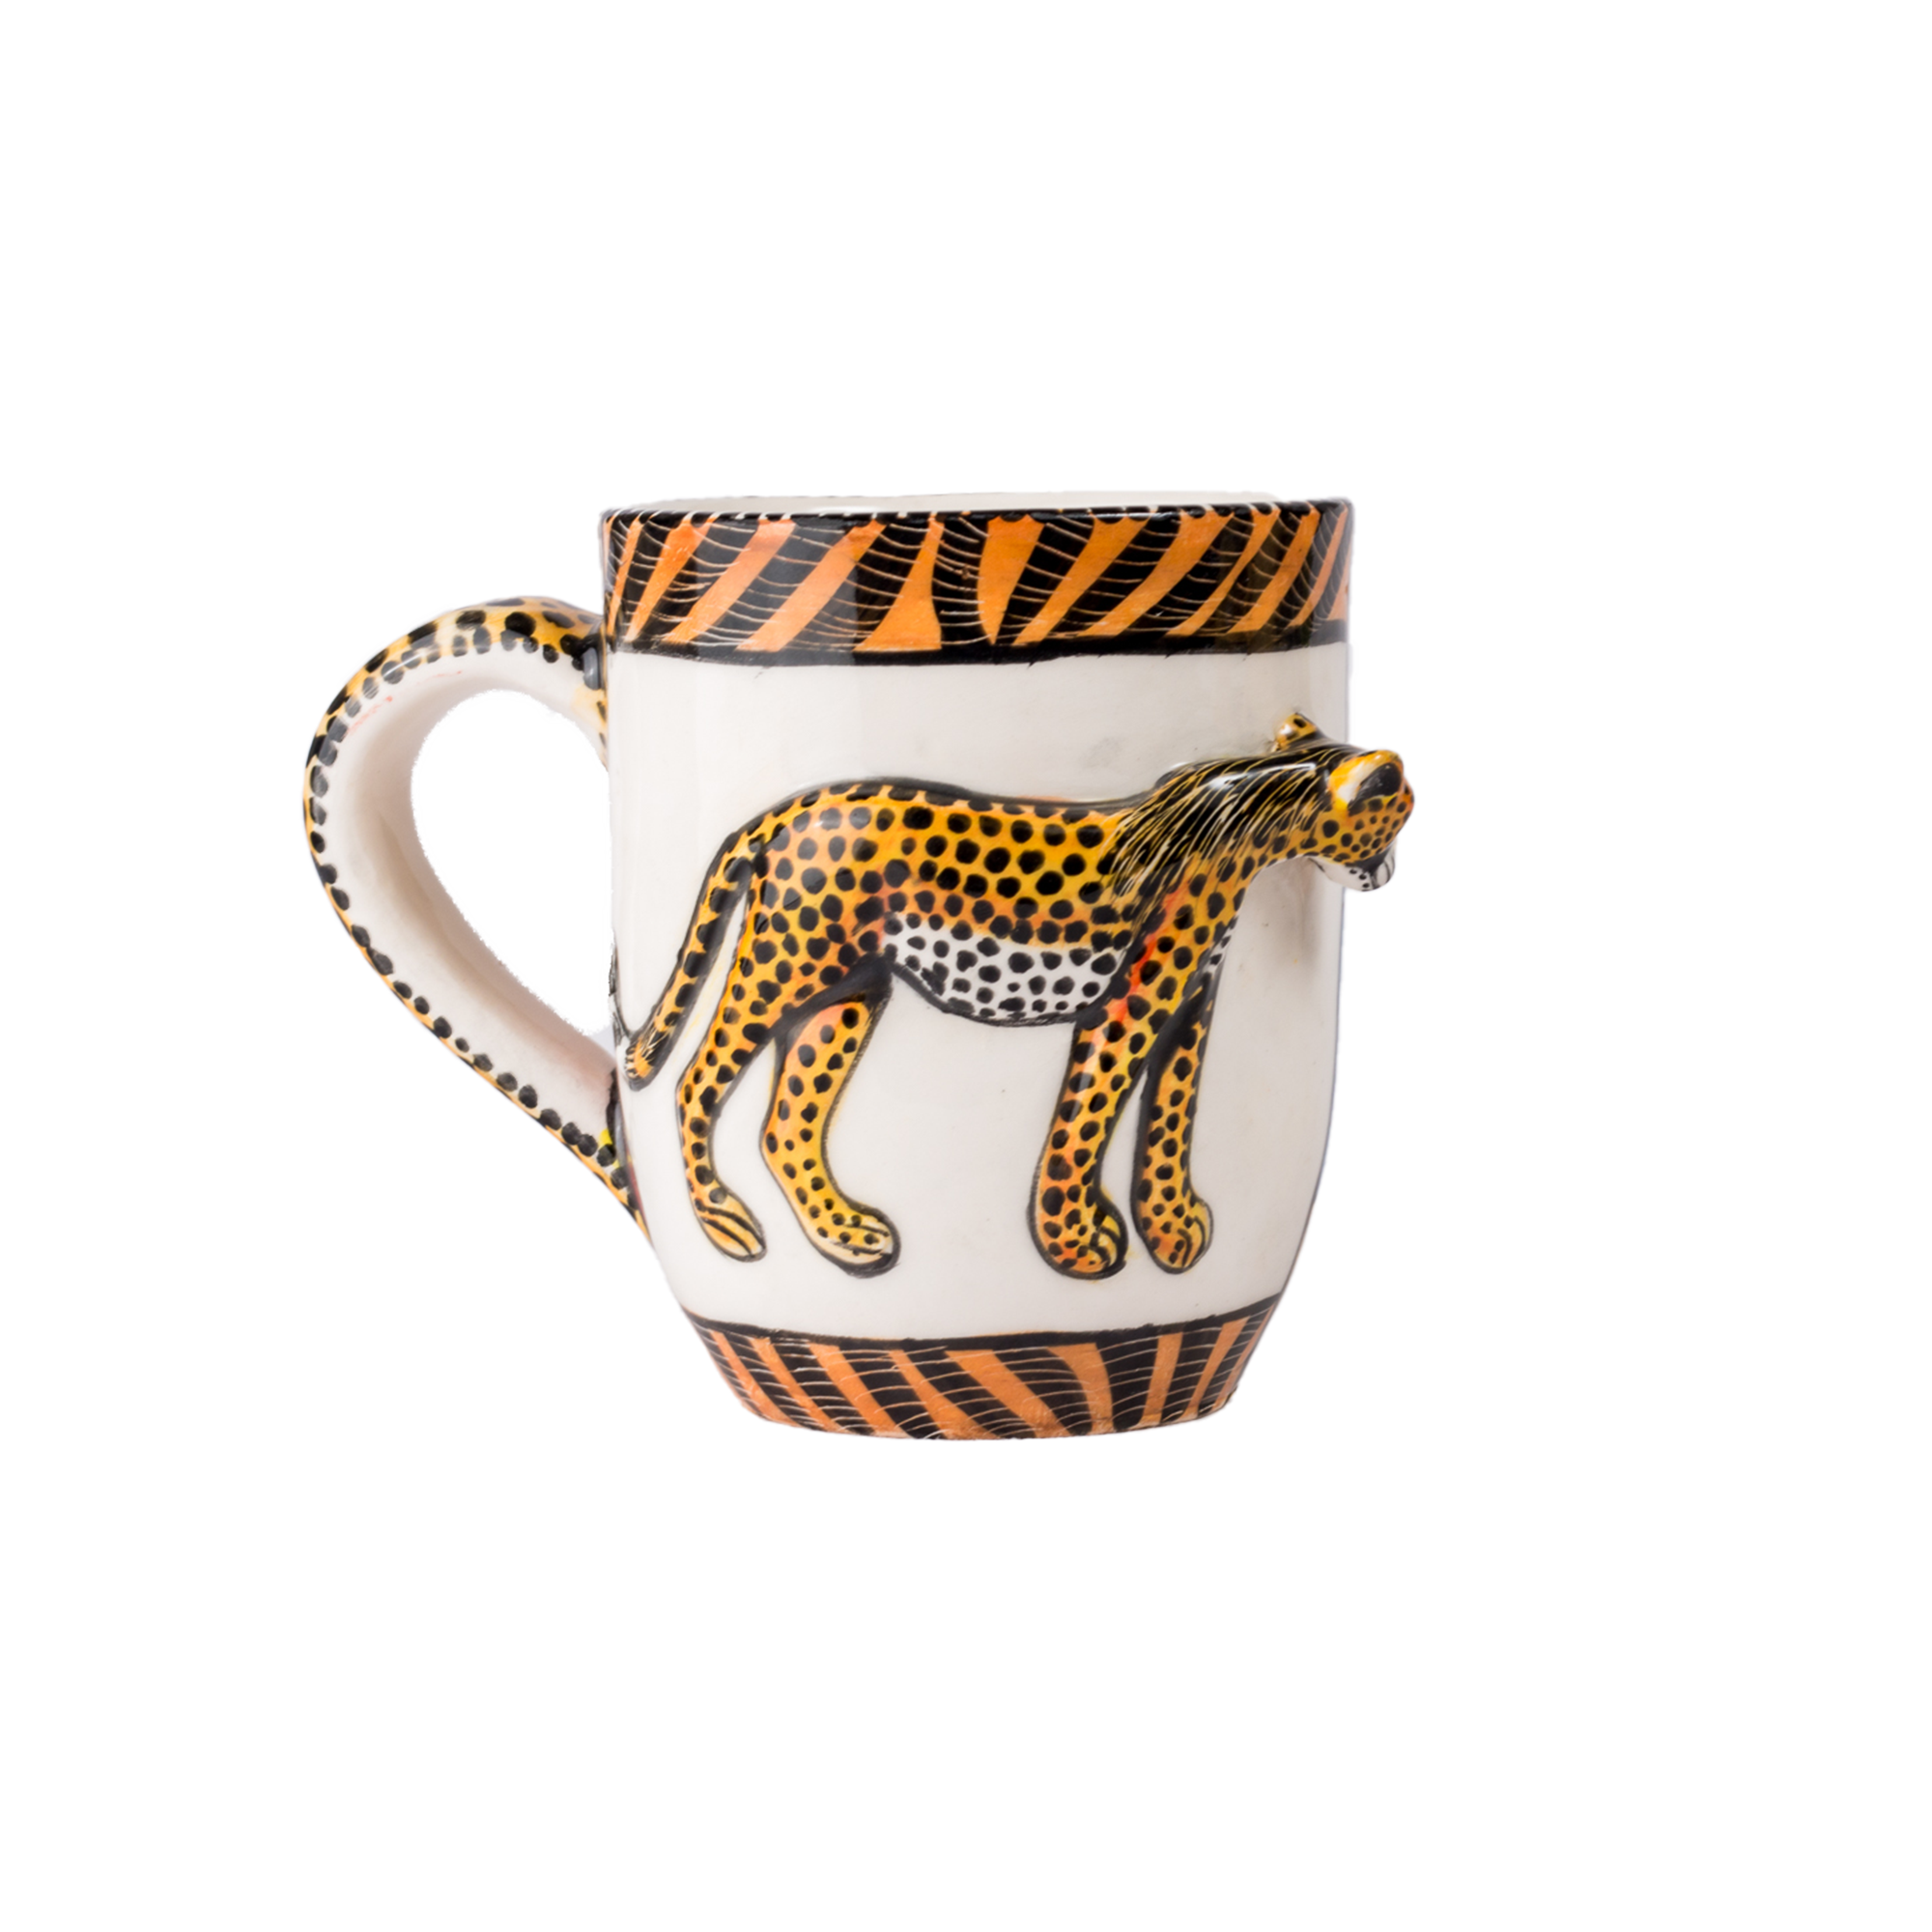 3D Hand Painted Ceramic Cheetah Mug